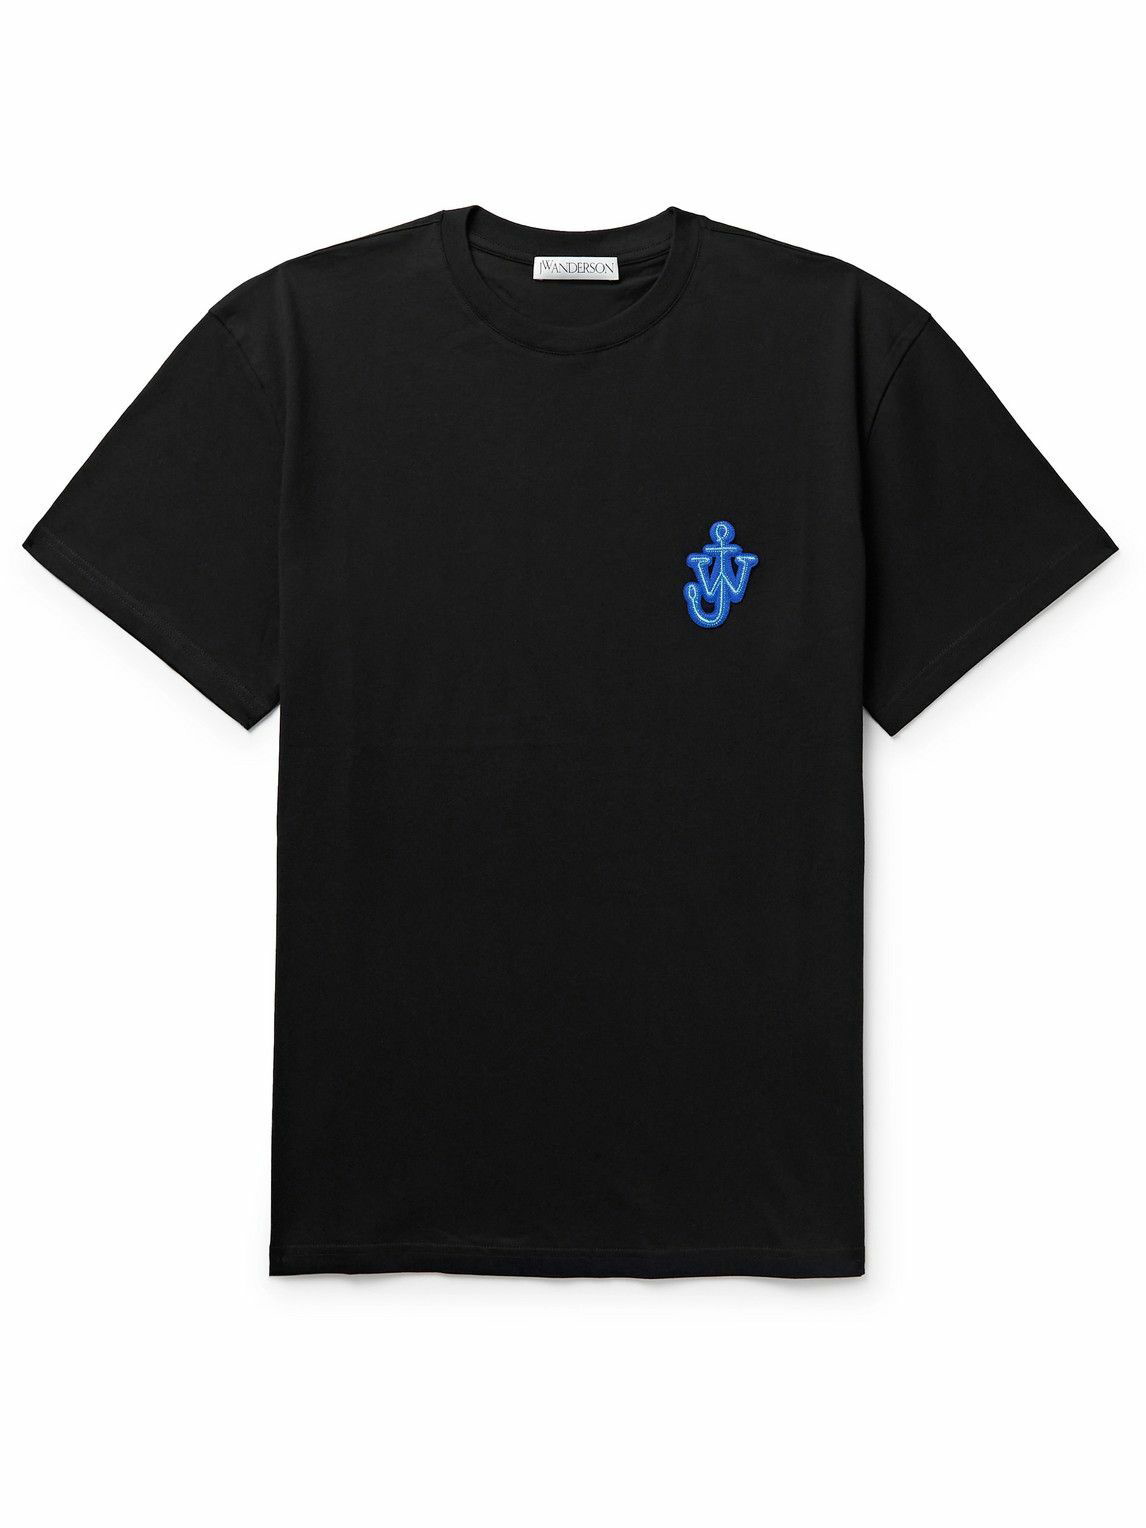 JW Anderson - Logo-Appliquéd Cotton-Jersey T-Shirt - Black JW Anderson